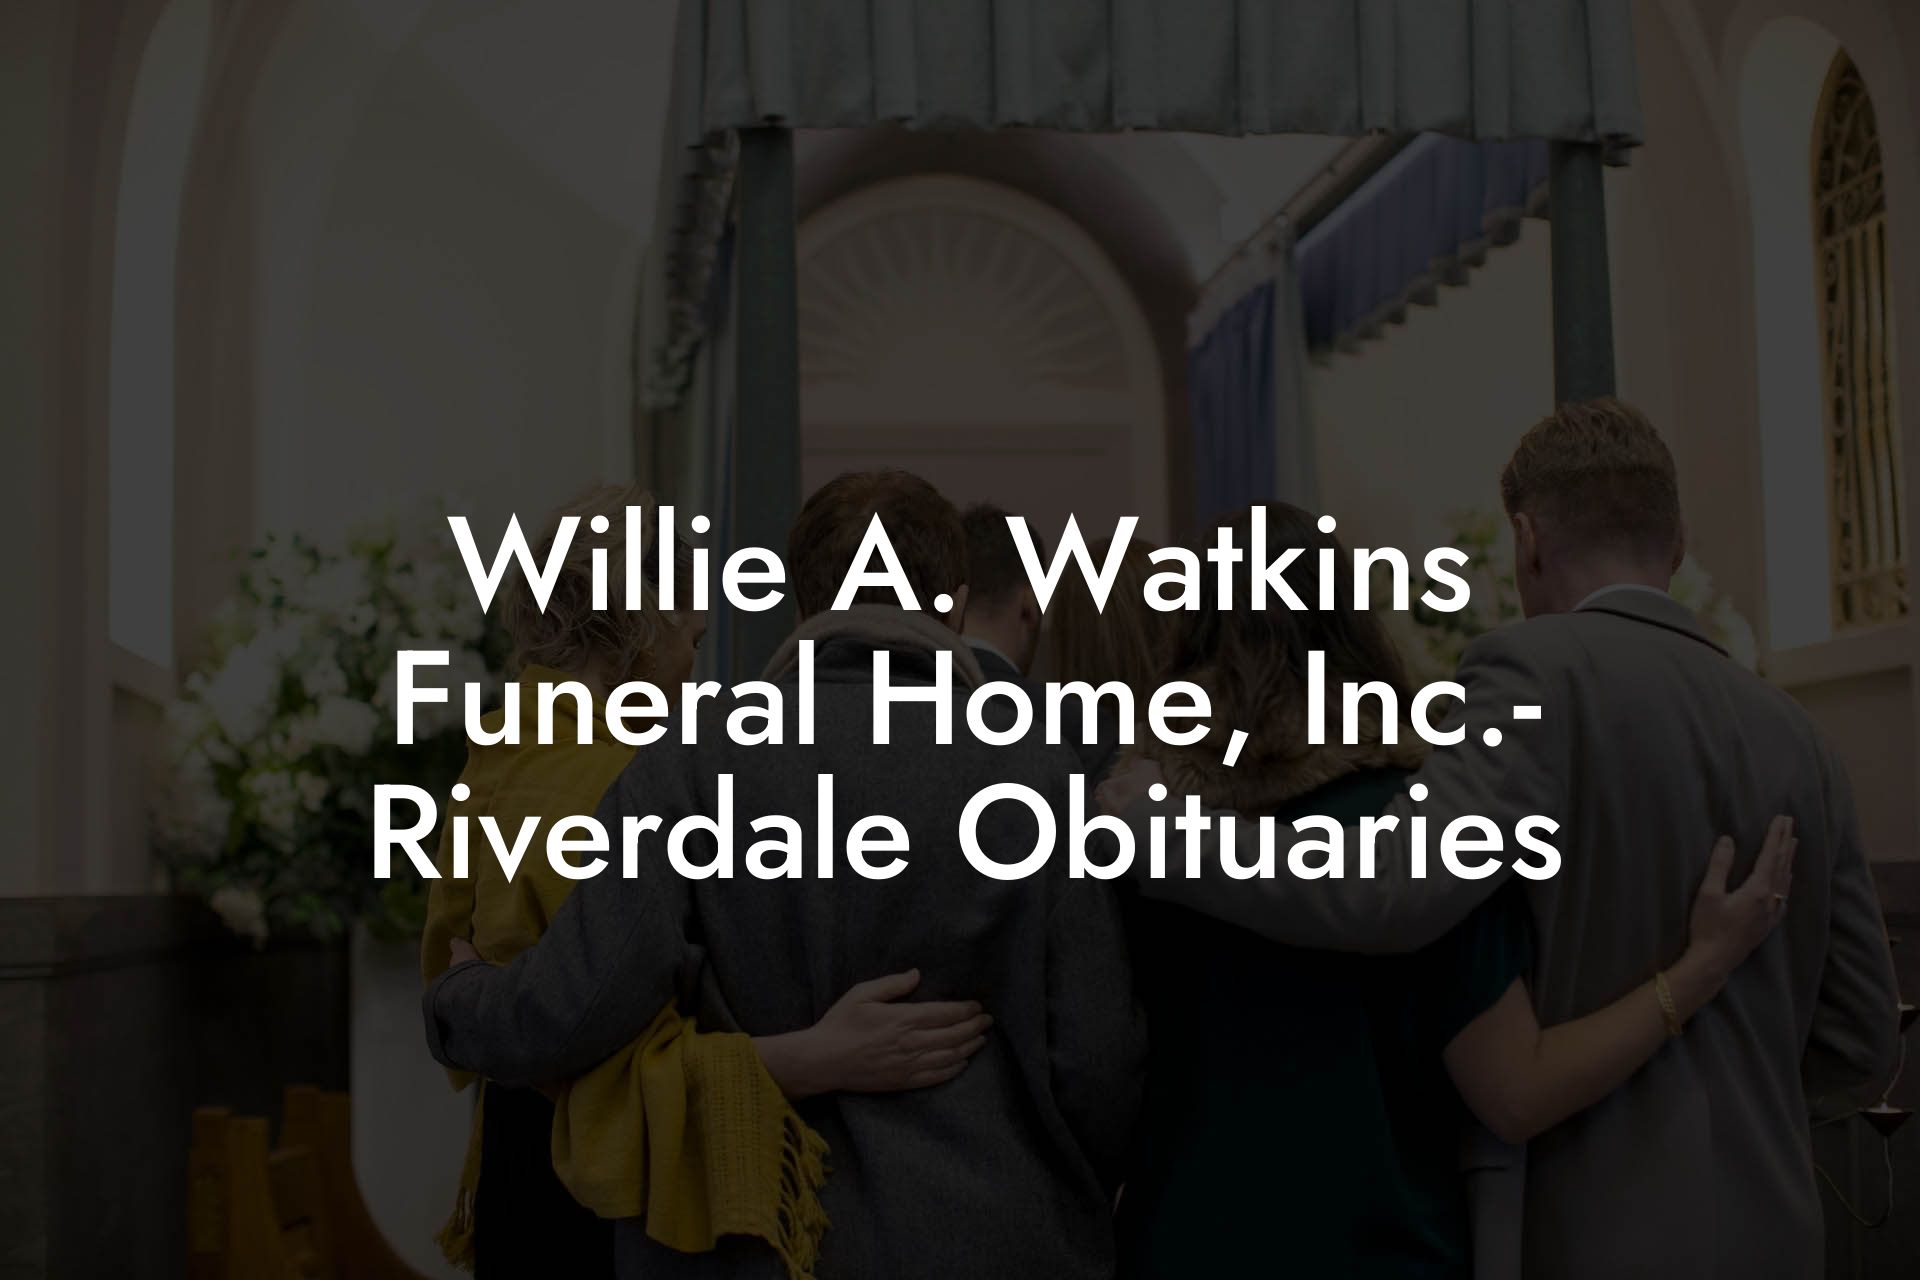 Willie A. Watkins Funeral Home, Inc.- Riverdale Obituaries